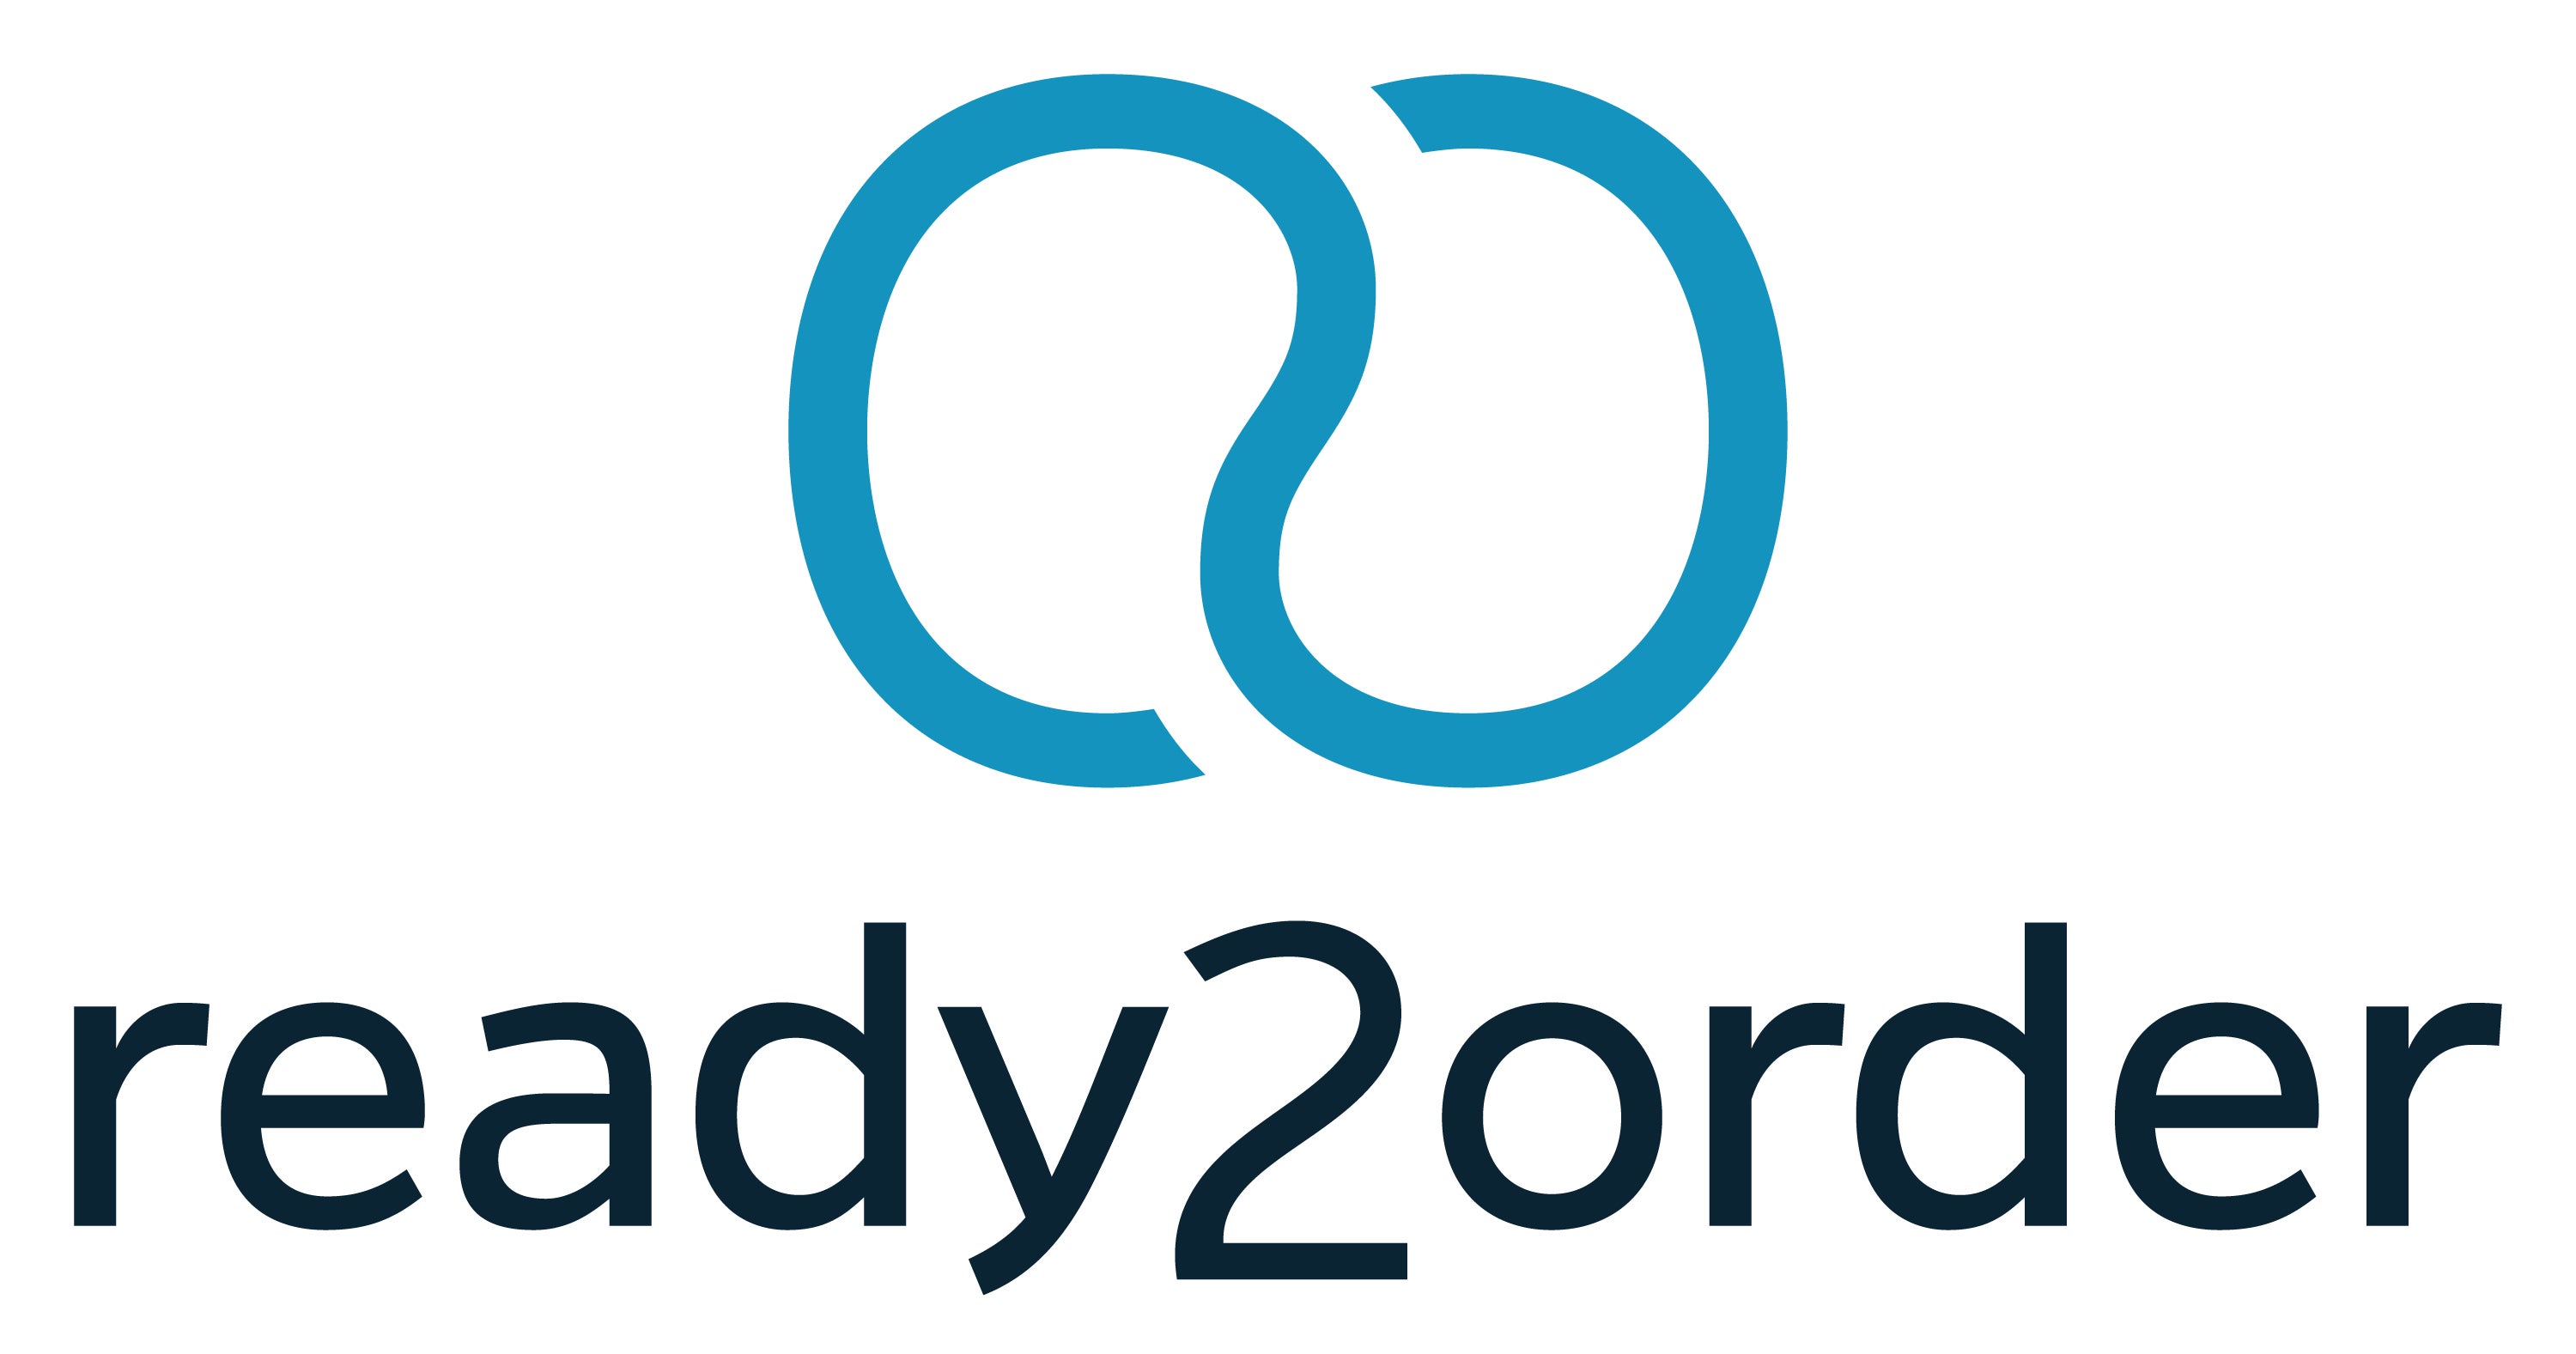 ready2order Logo